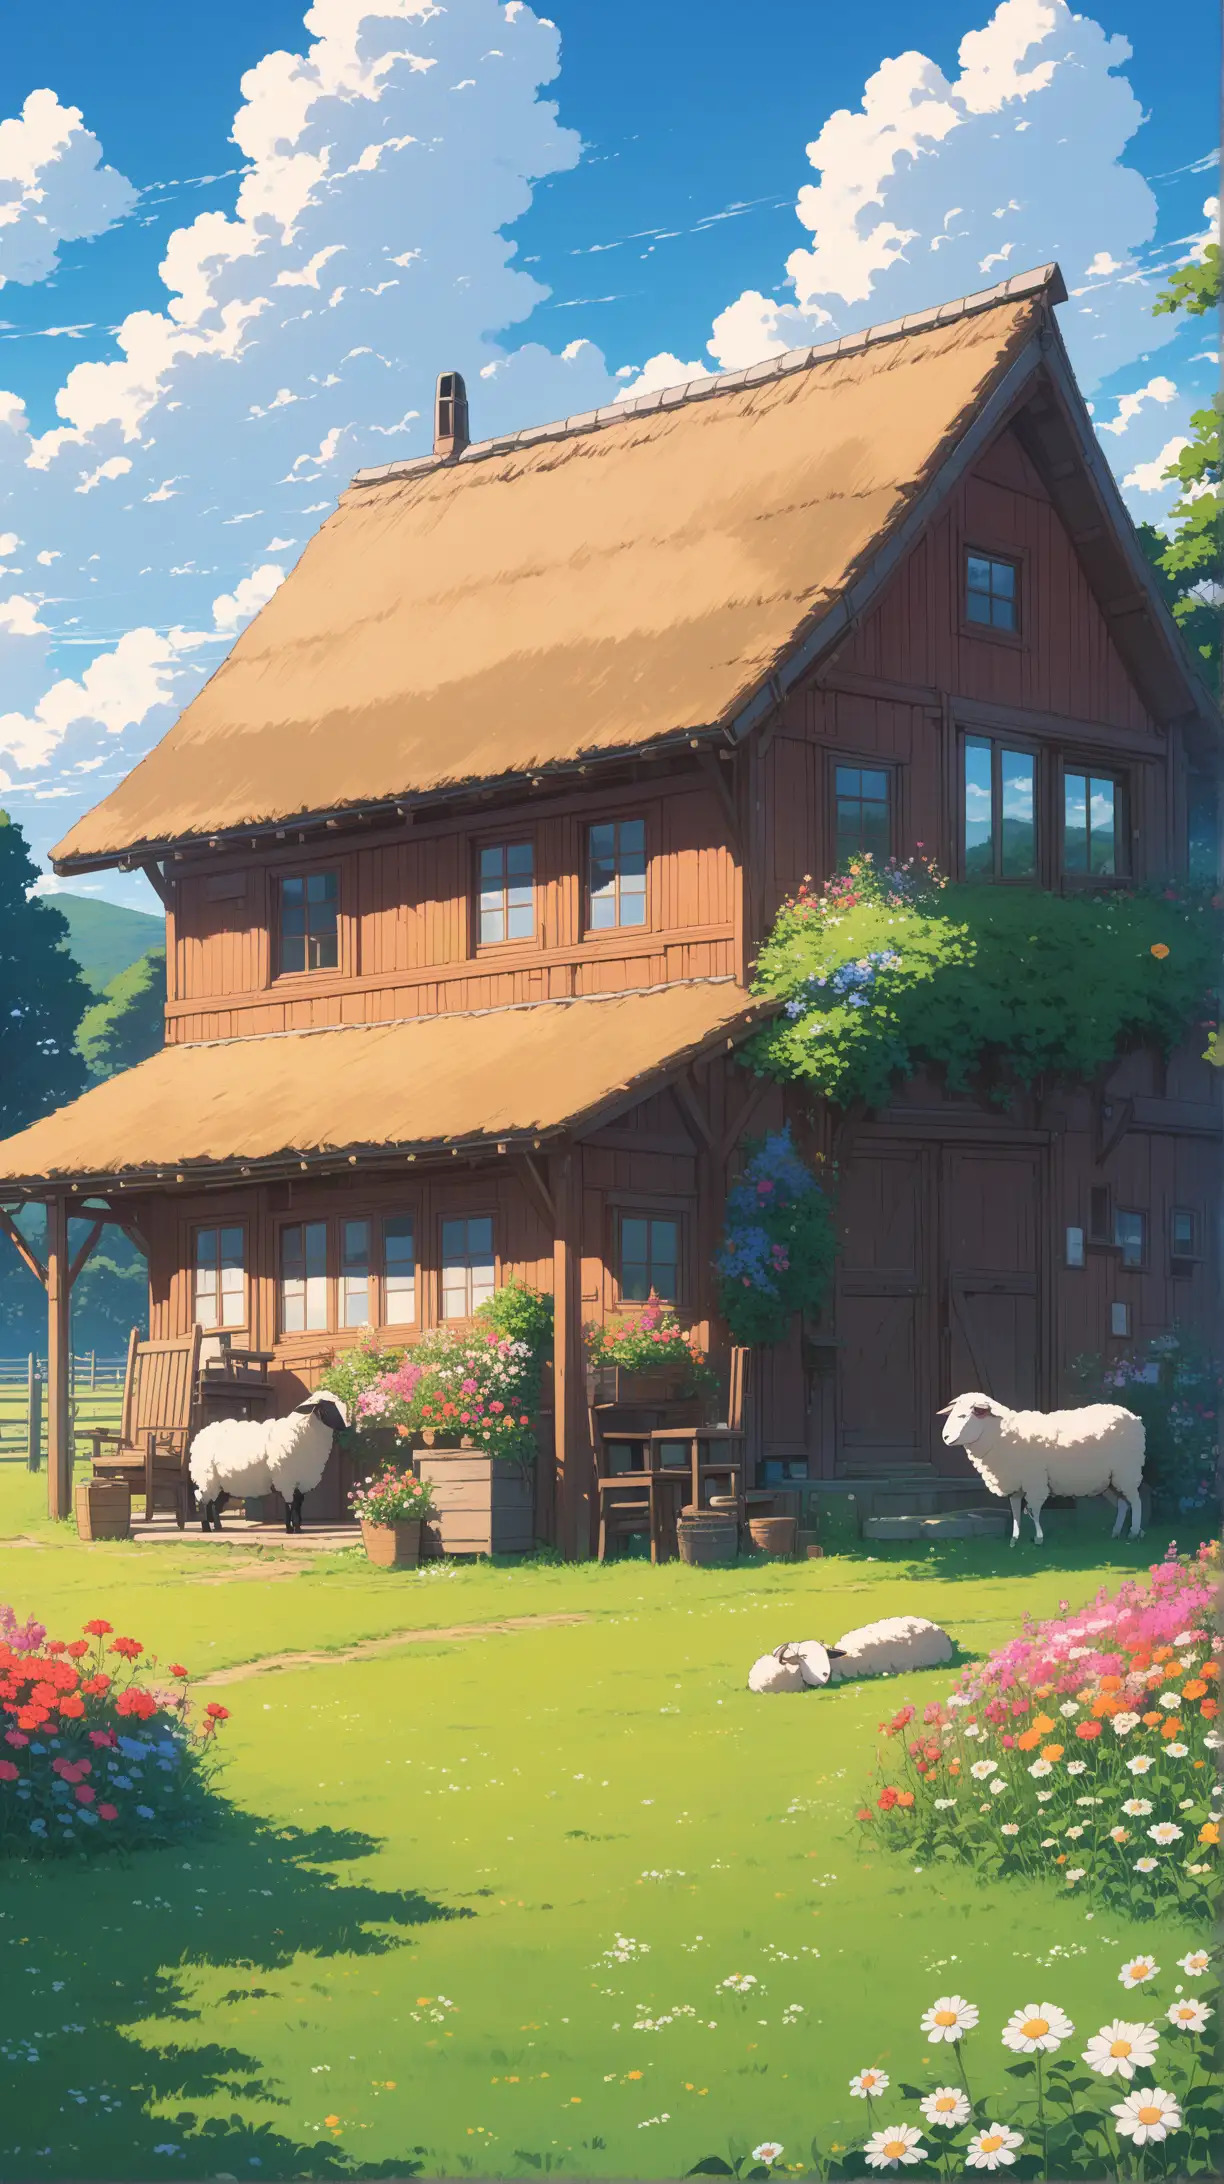 Charming Farmhouse Meadow Elderly Woman Sheep and Vibrant Flora in AnimeGhibli Style